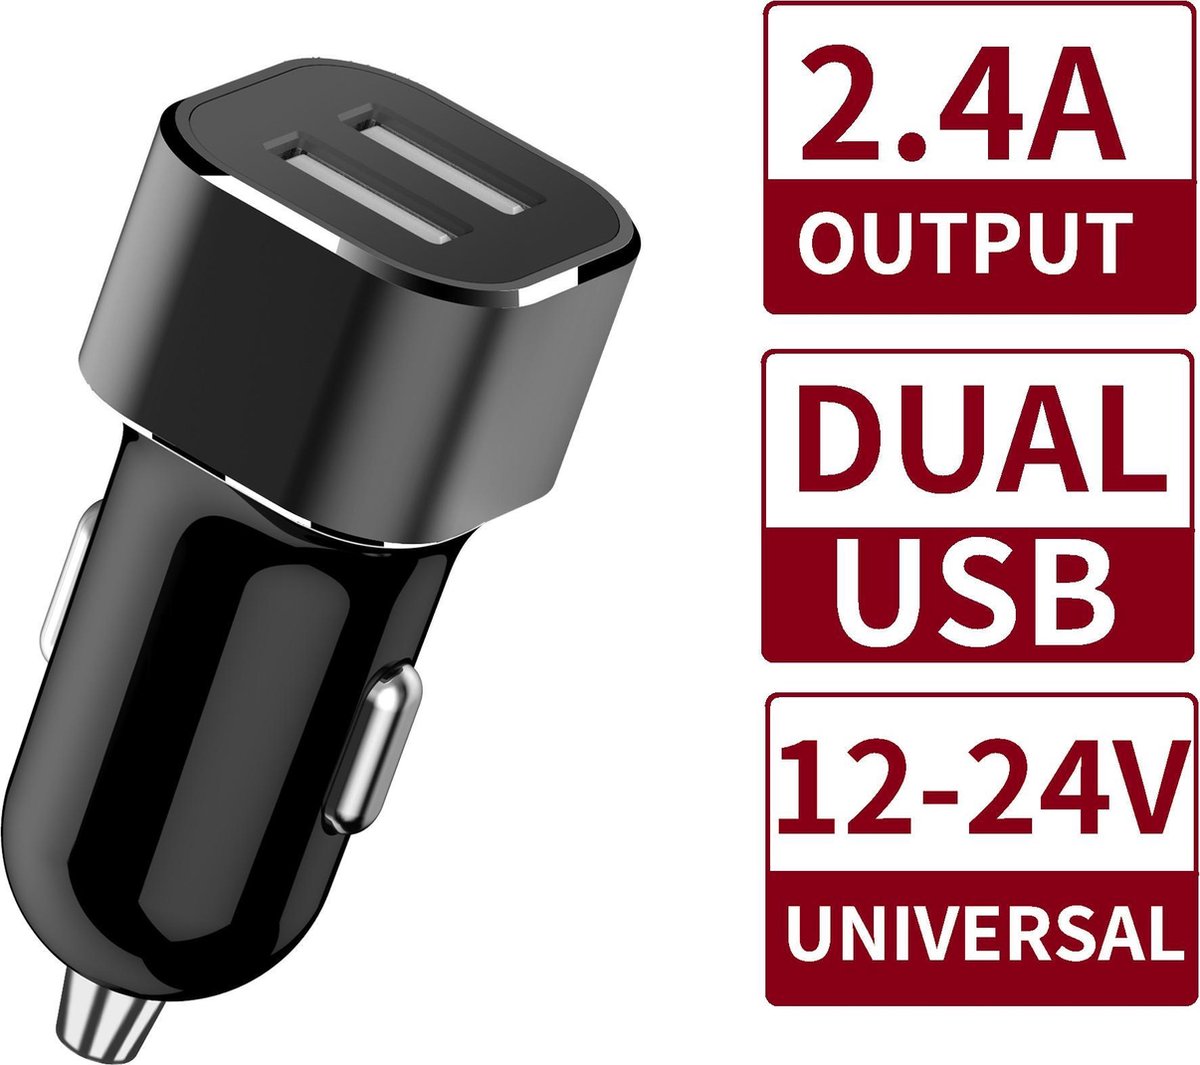 Dubbele USB Auto Oplader 12V / 24V Sigarettenaansteker Poort Autolader - Twee poorten - Phreeze